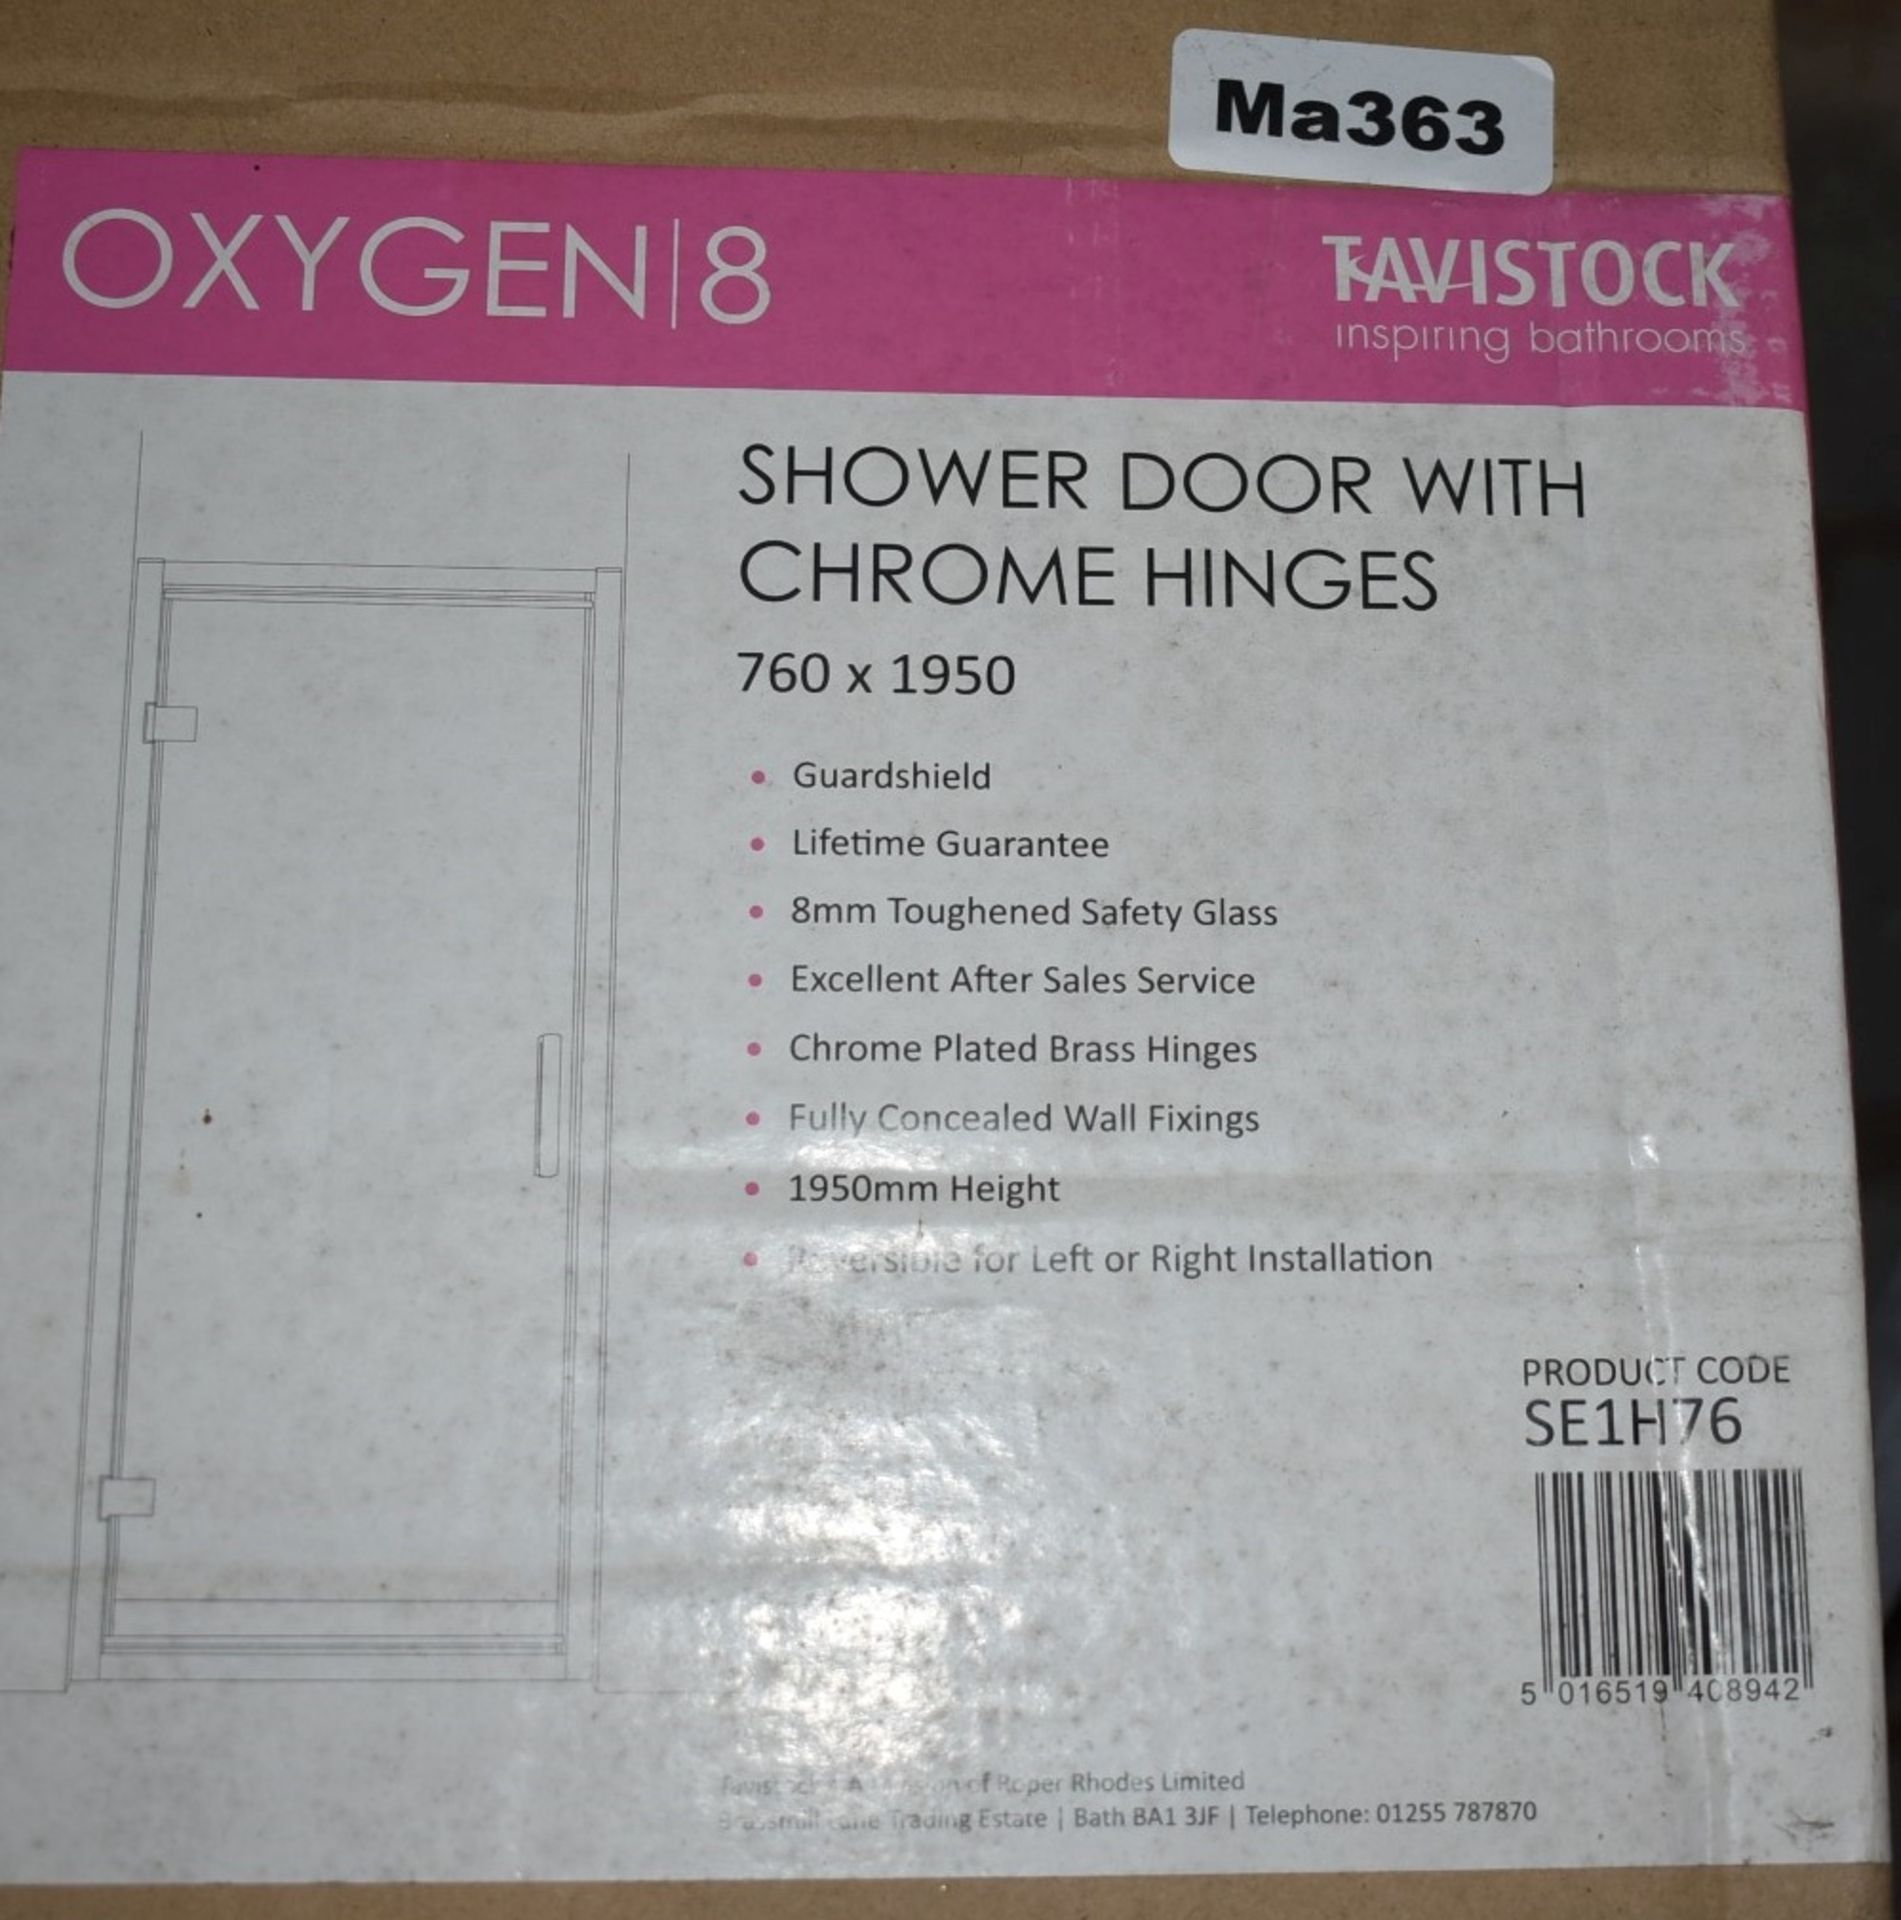 1 x Tavistock Oxygen 8 Shower Door With Chrome Hinges - 760x1950mm - Product Code SE1H76 -  Unused